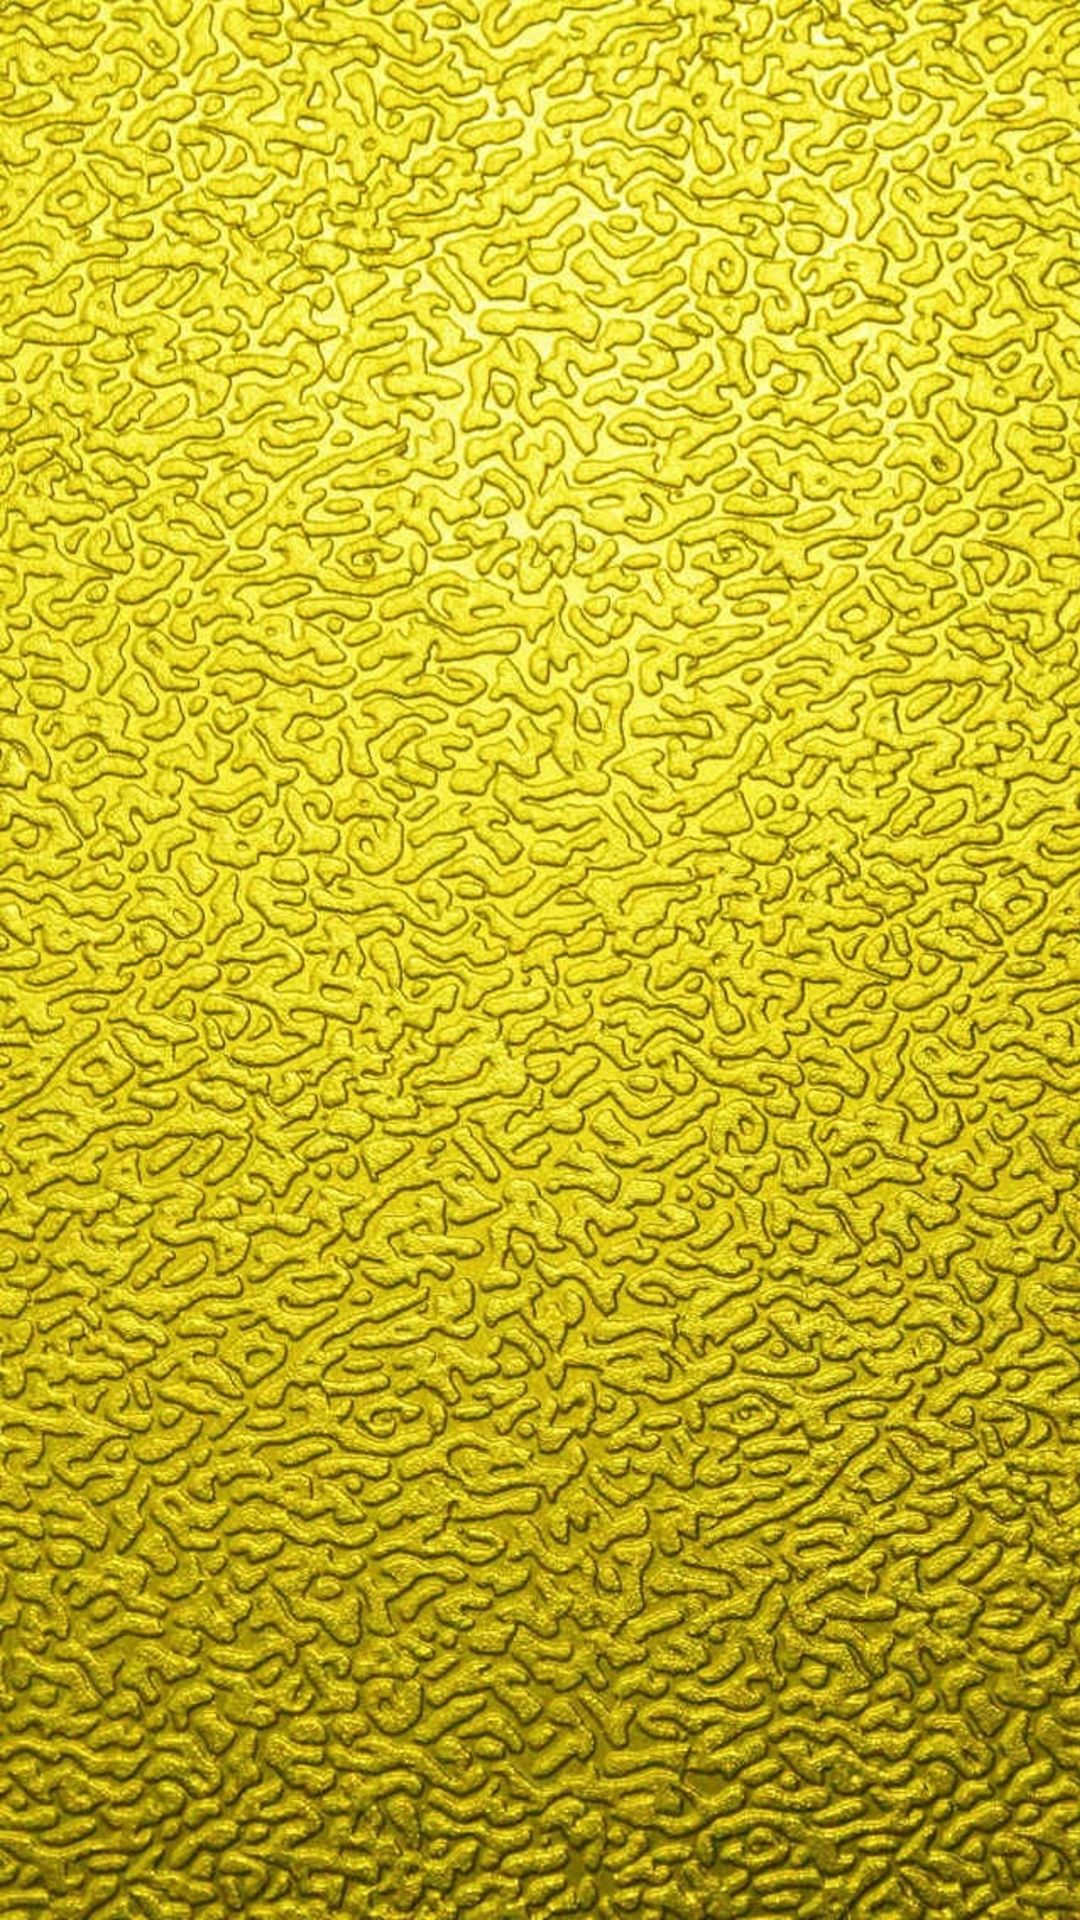 Abstract Minimal Golden Texture Background iPhone 8 Wallpaper